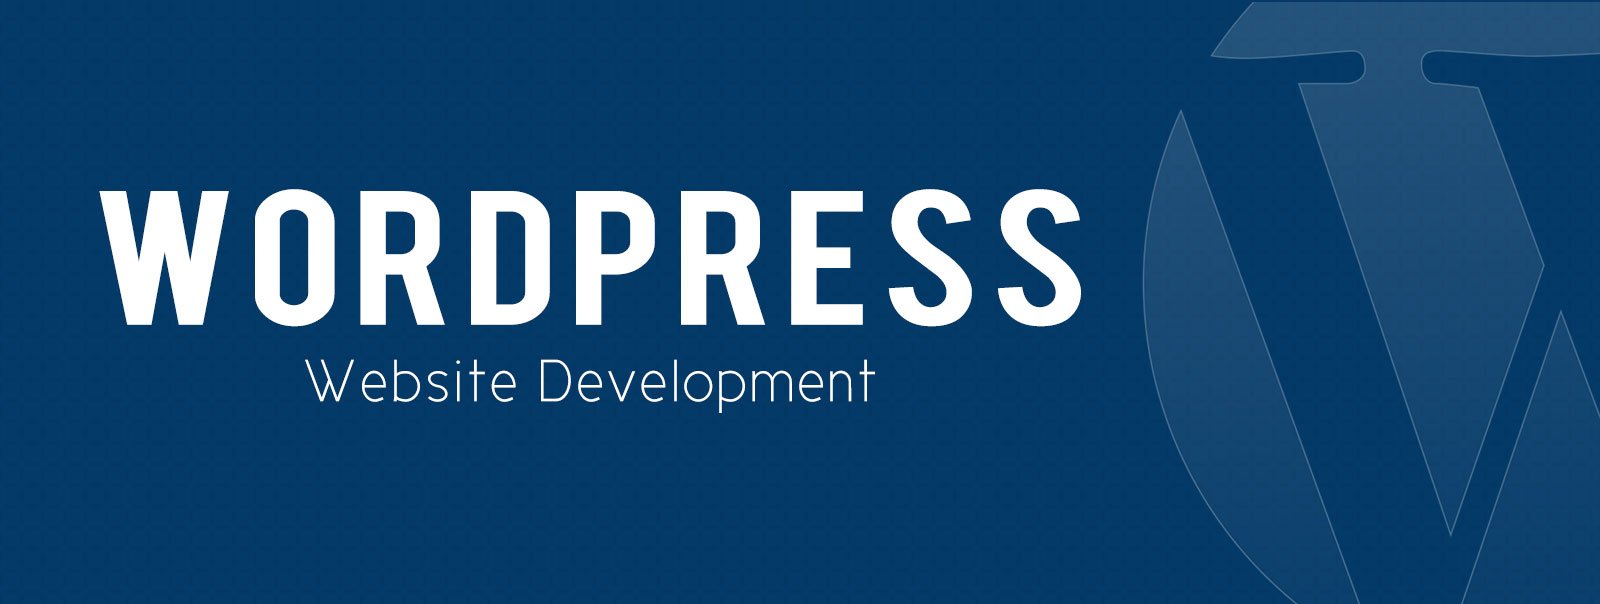 Wordpress development company | support &amp; maintenance | WP security services- wordpresswebsite.in cover